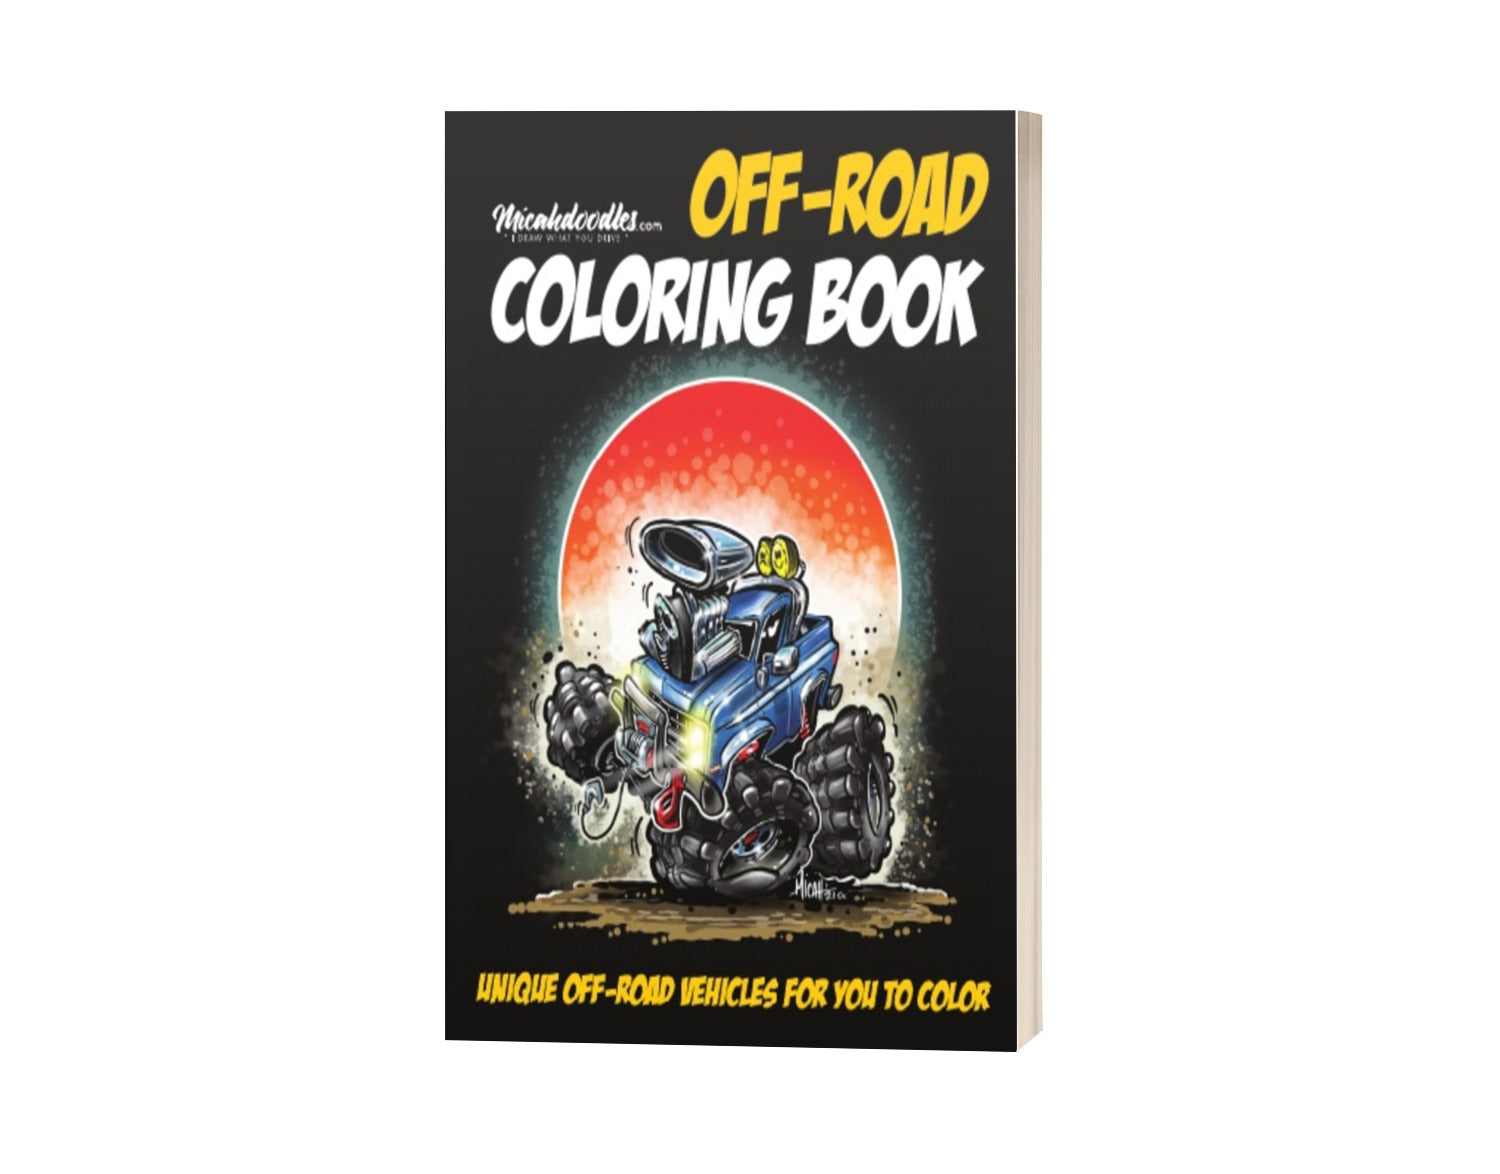 Micahdoodles OFF-ROAD Coloring Book